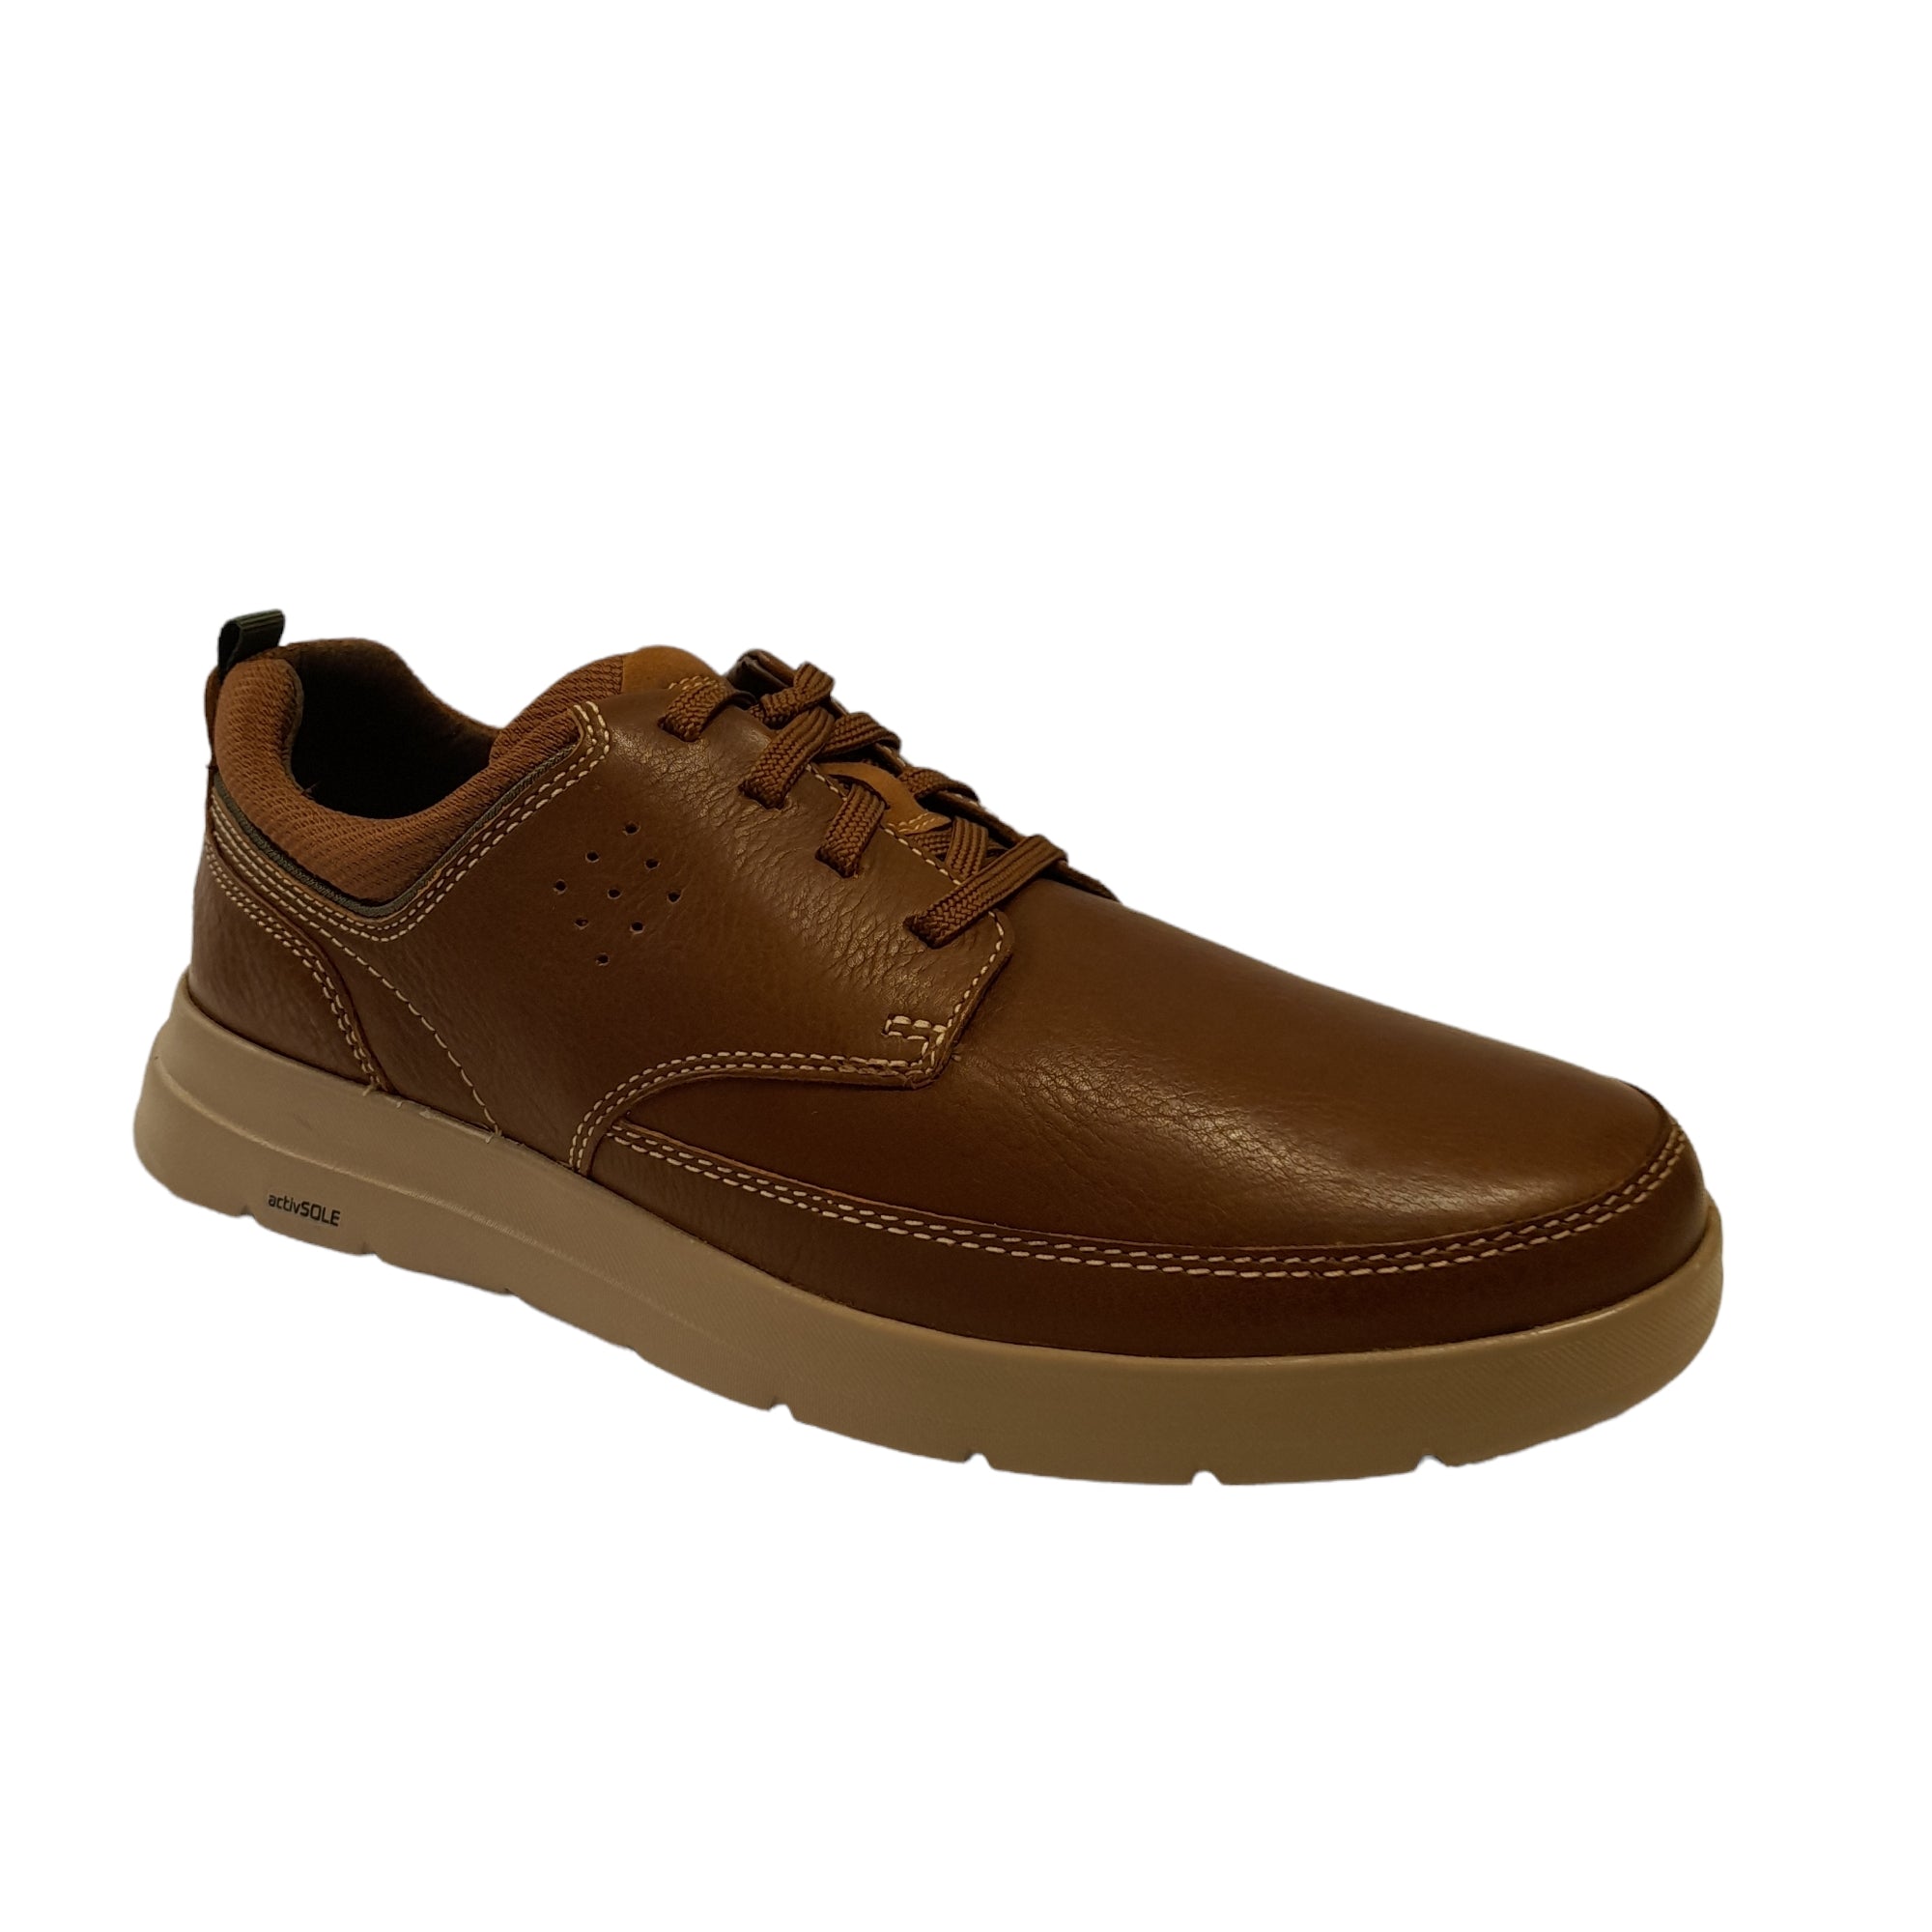 M Cayden PT - shoe&amp;me - Rockport - Shoe - Mens, Shoes